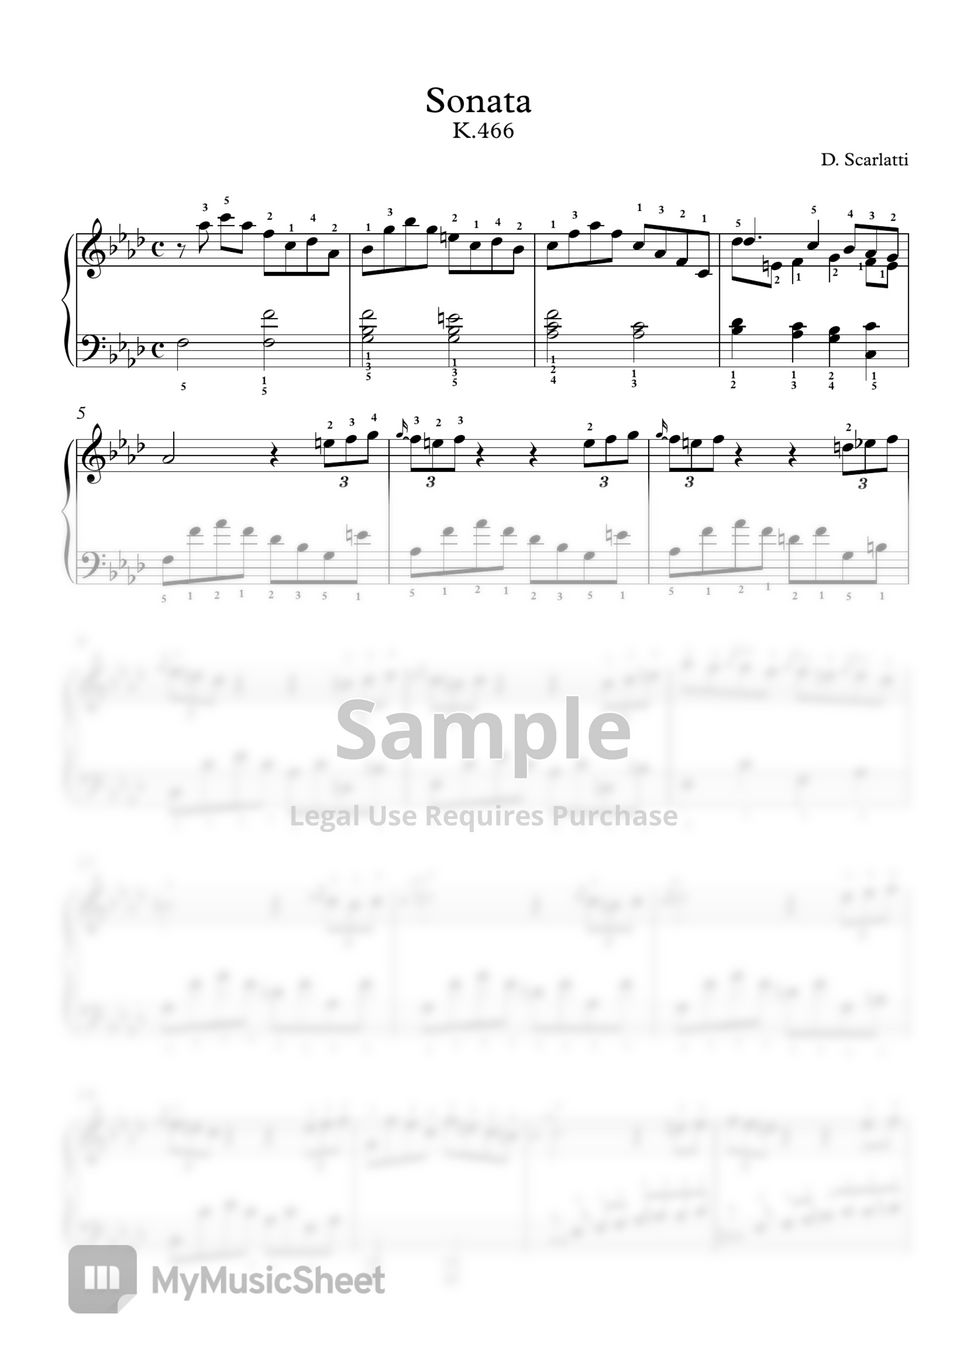 D. Scarlatti - Sonata - K.466 by Potter Jayan Piano